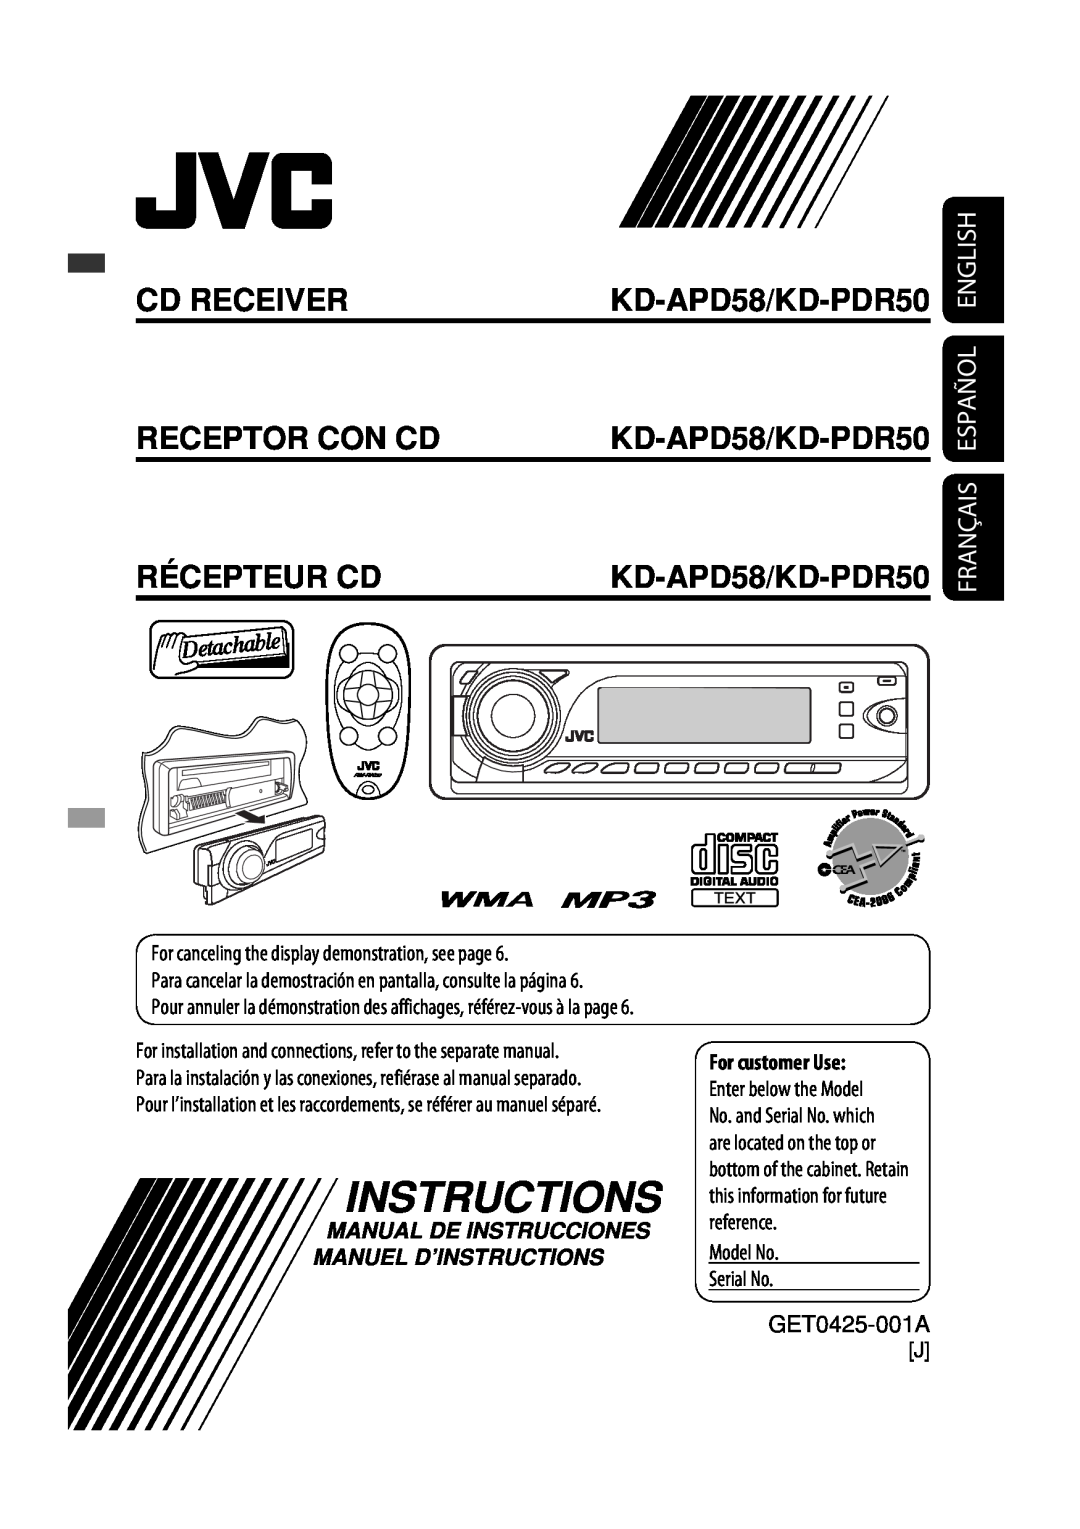 JVC GET0425-001A manual Instructions, Cd Receiver Receptor Con Cd Récepteur Cd, Français Español English 